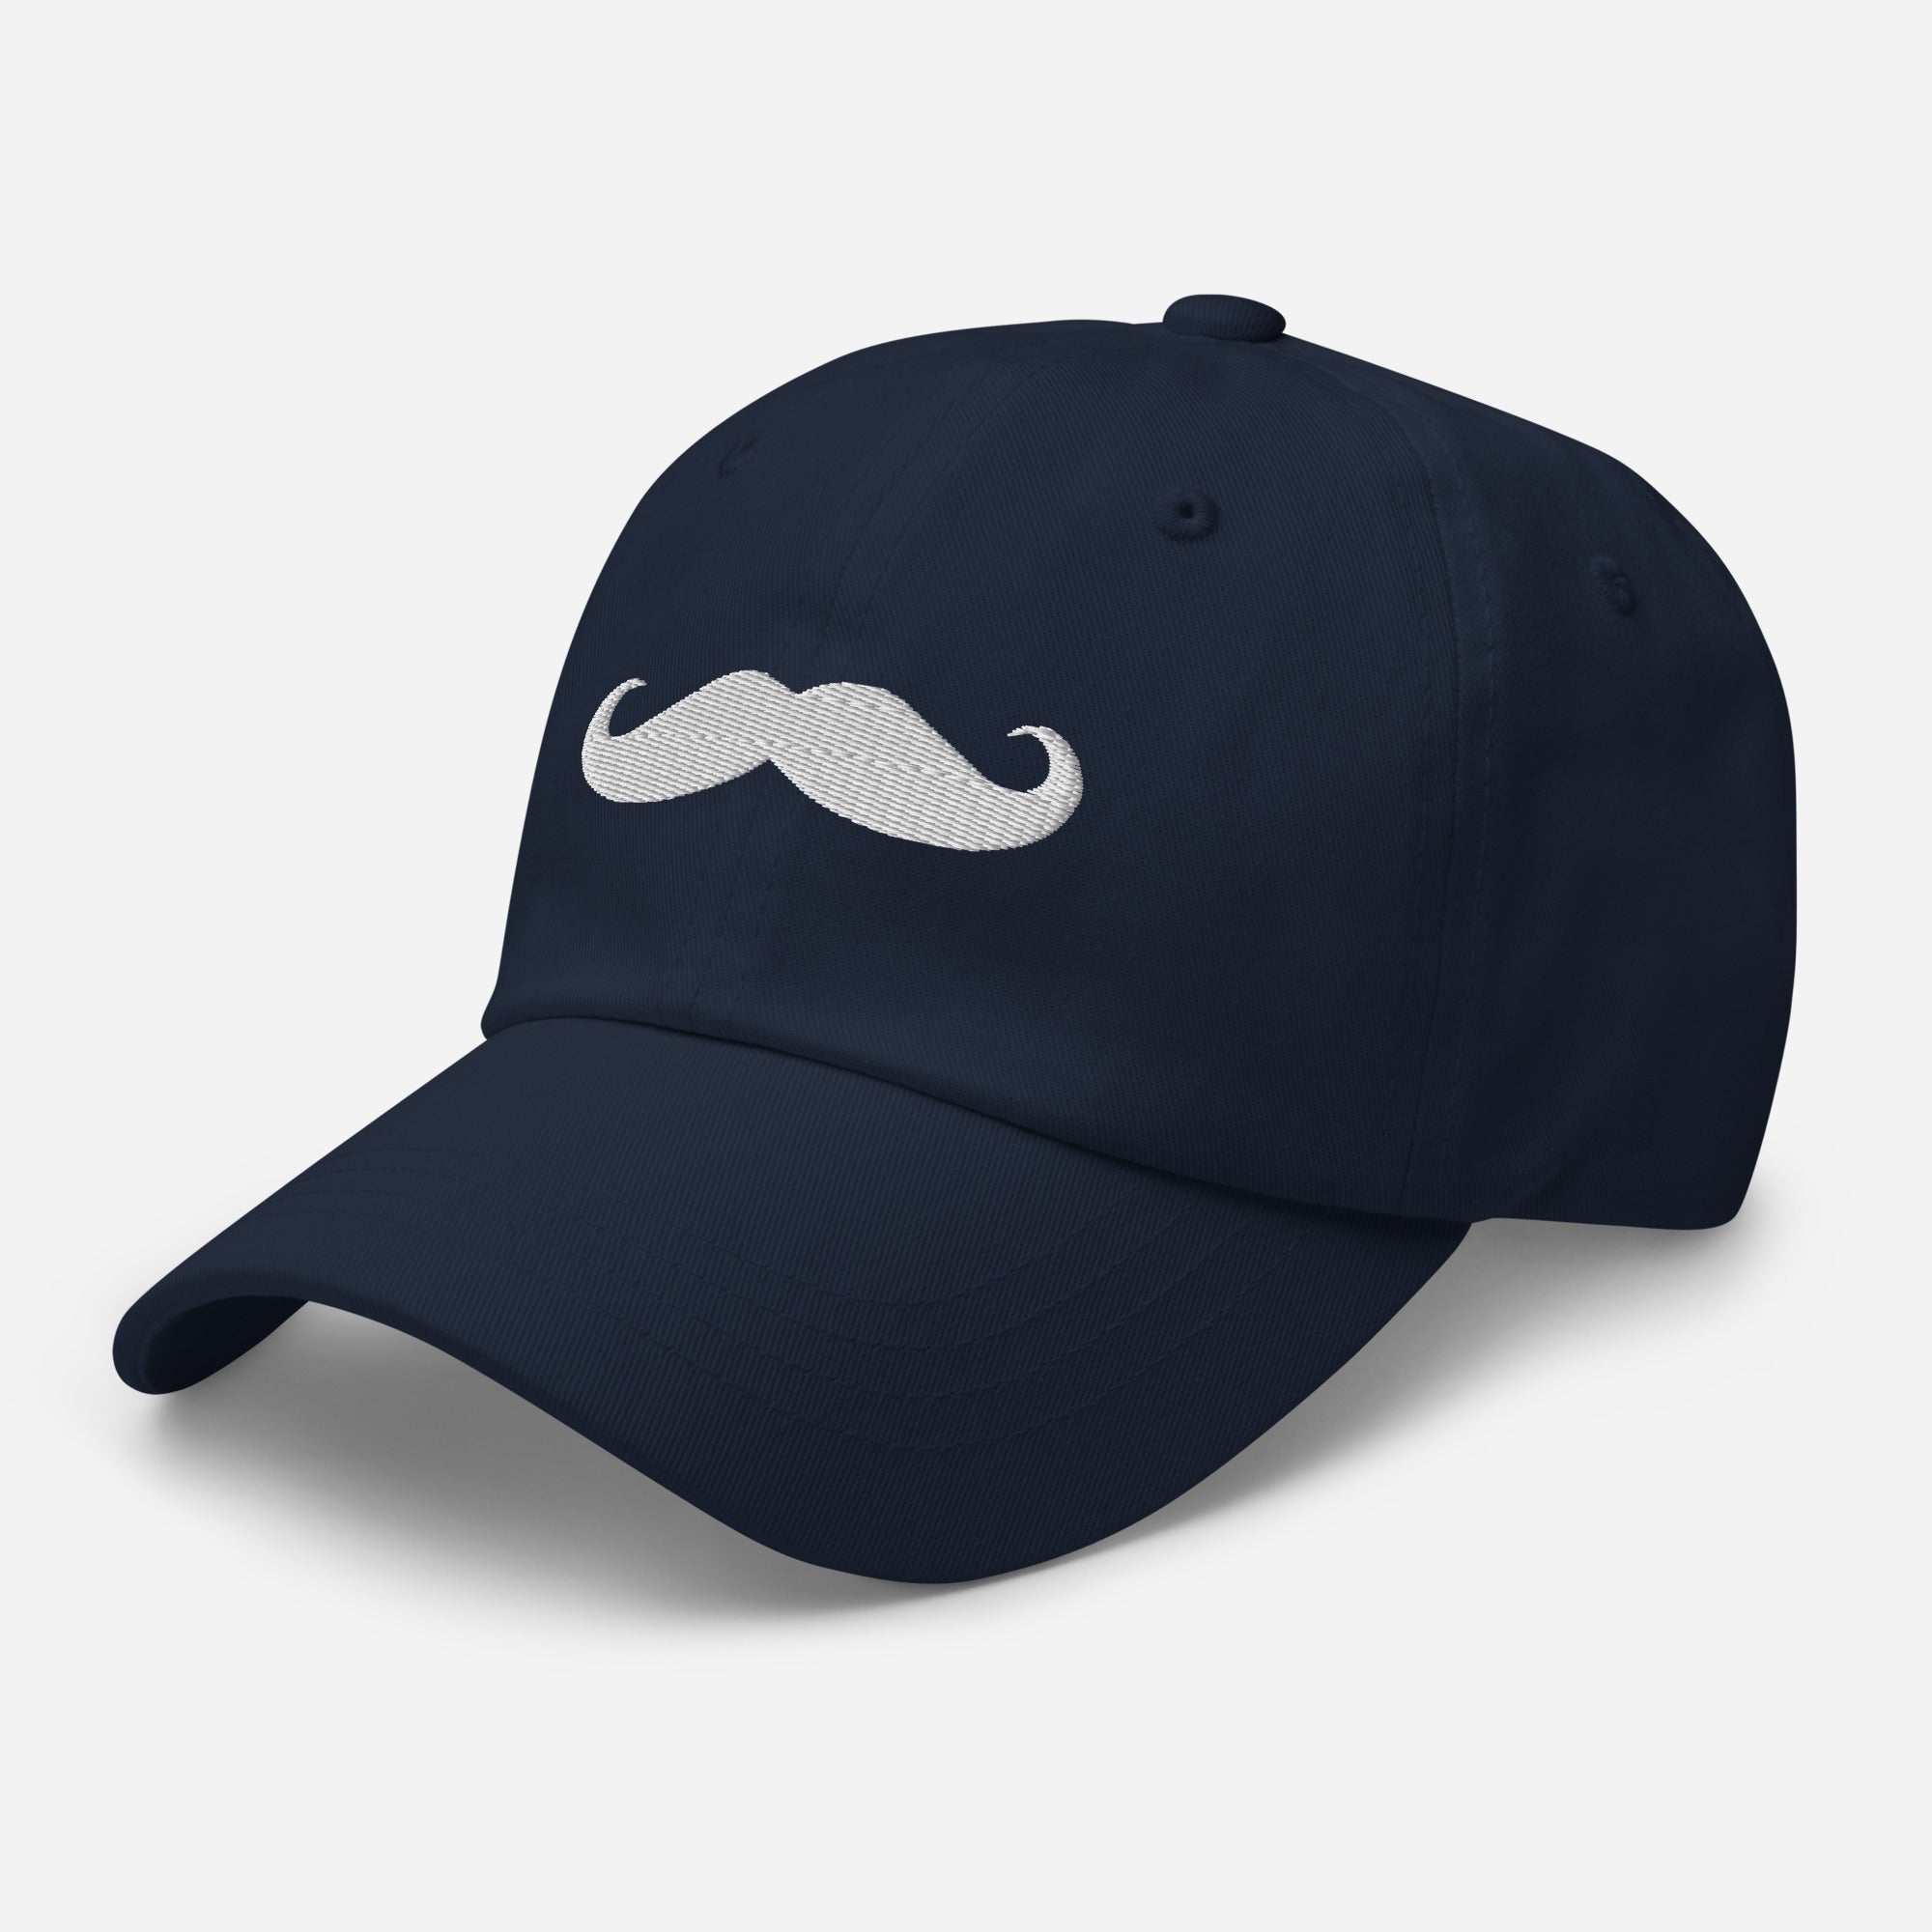 Classic Handlebar Mustache Embroidered Baseball Cap Dad hat